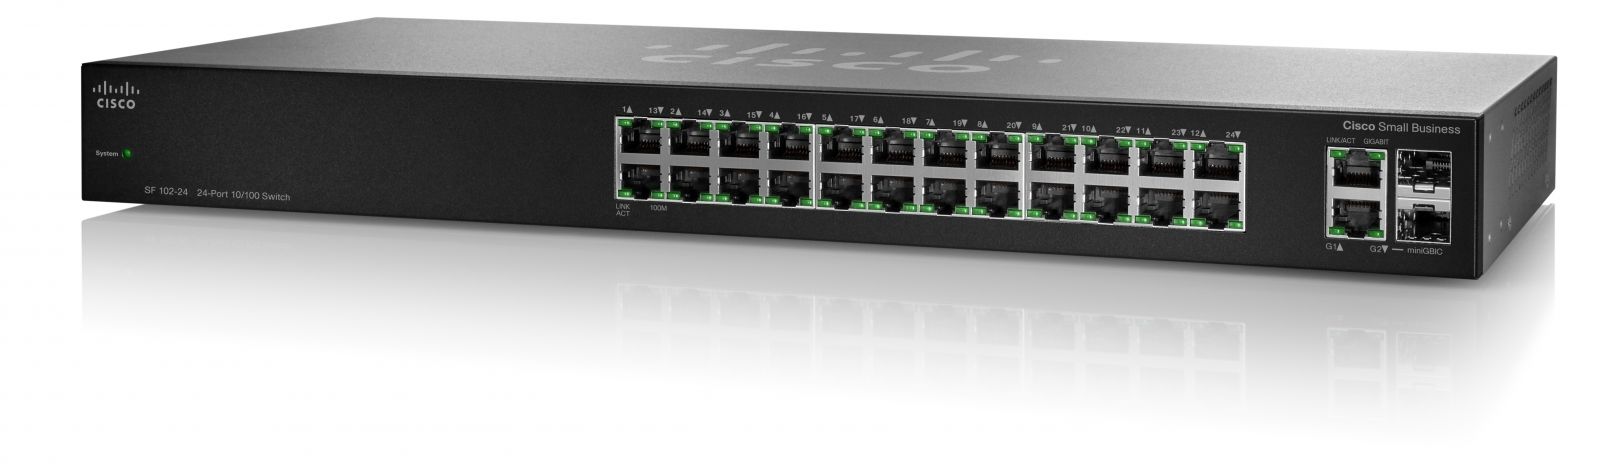 Cisco SF102-24 24-Port 10/100 Switch with Gigabit